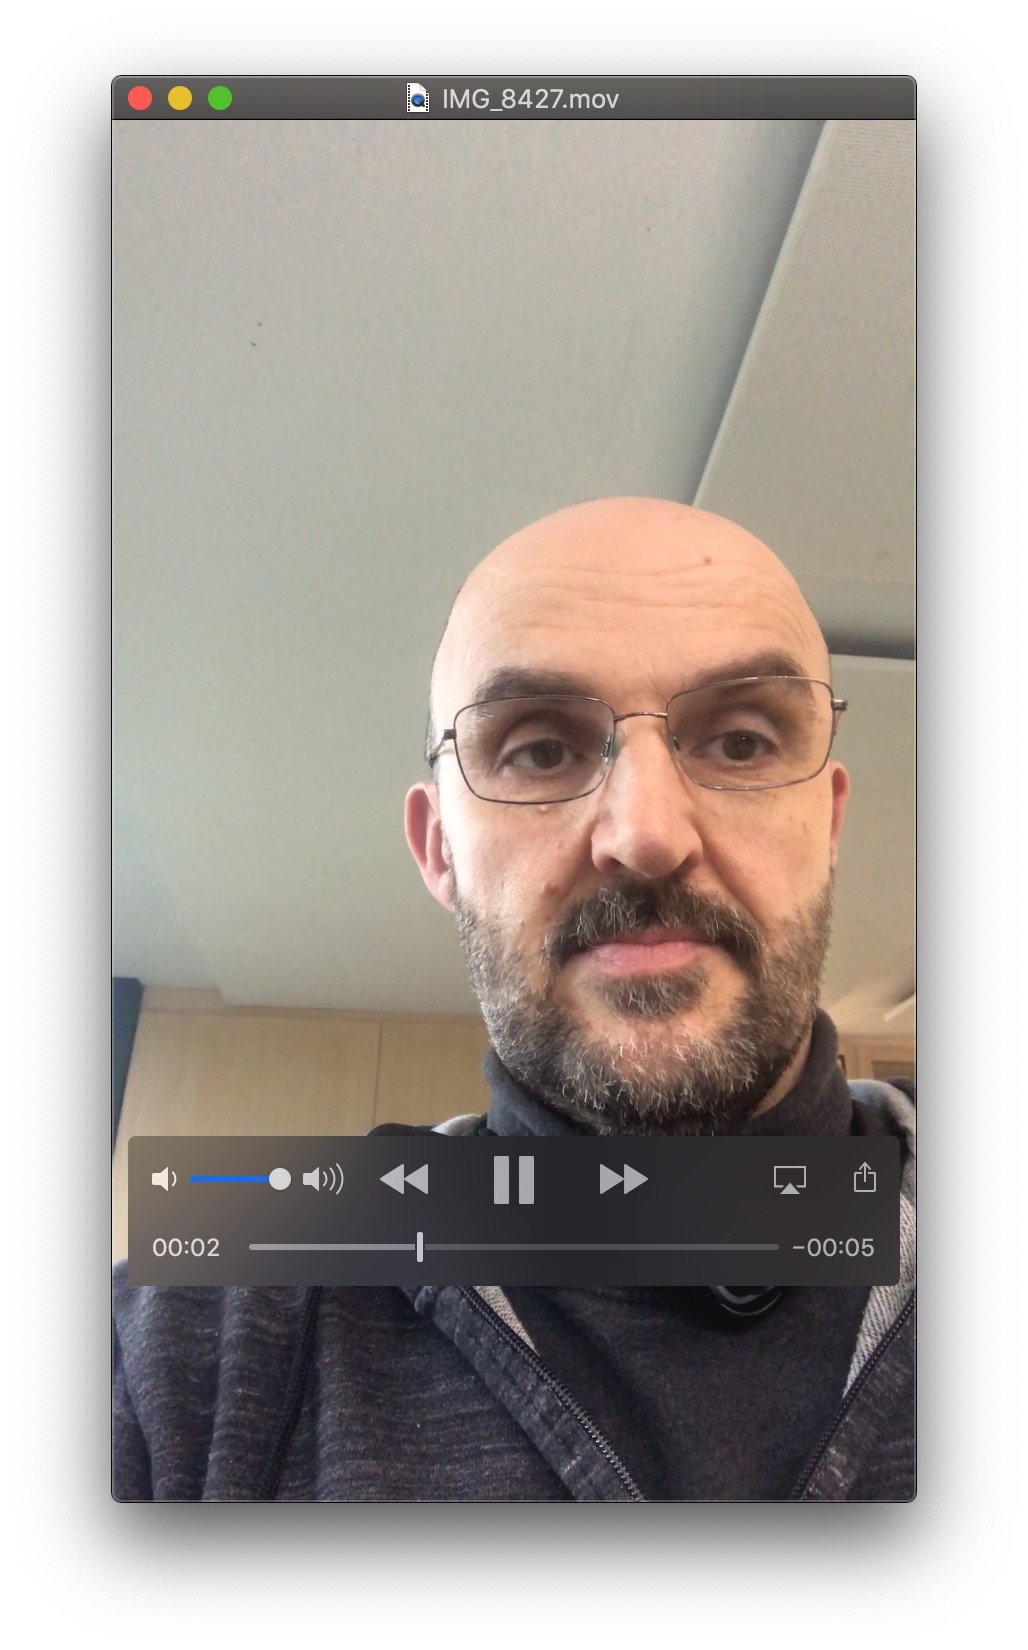 iPhone 7 Selfie Video